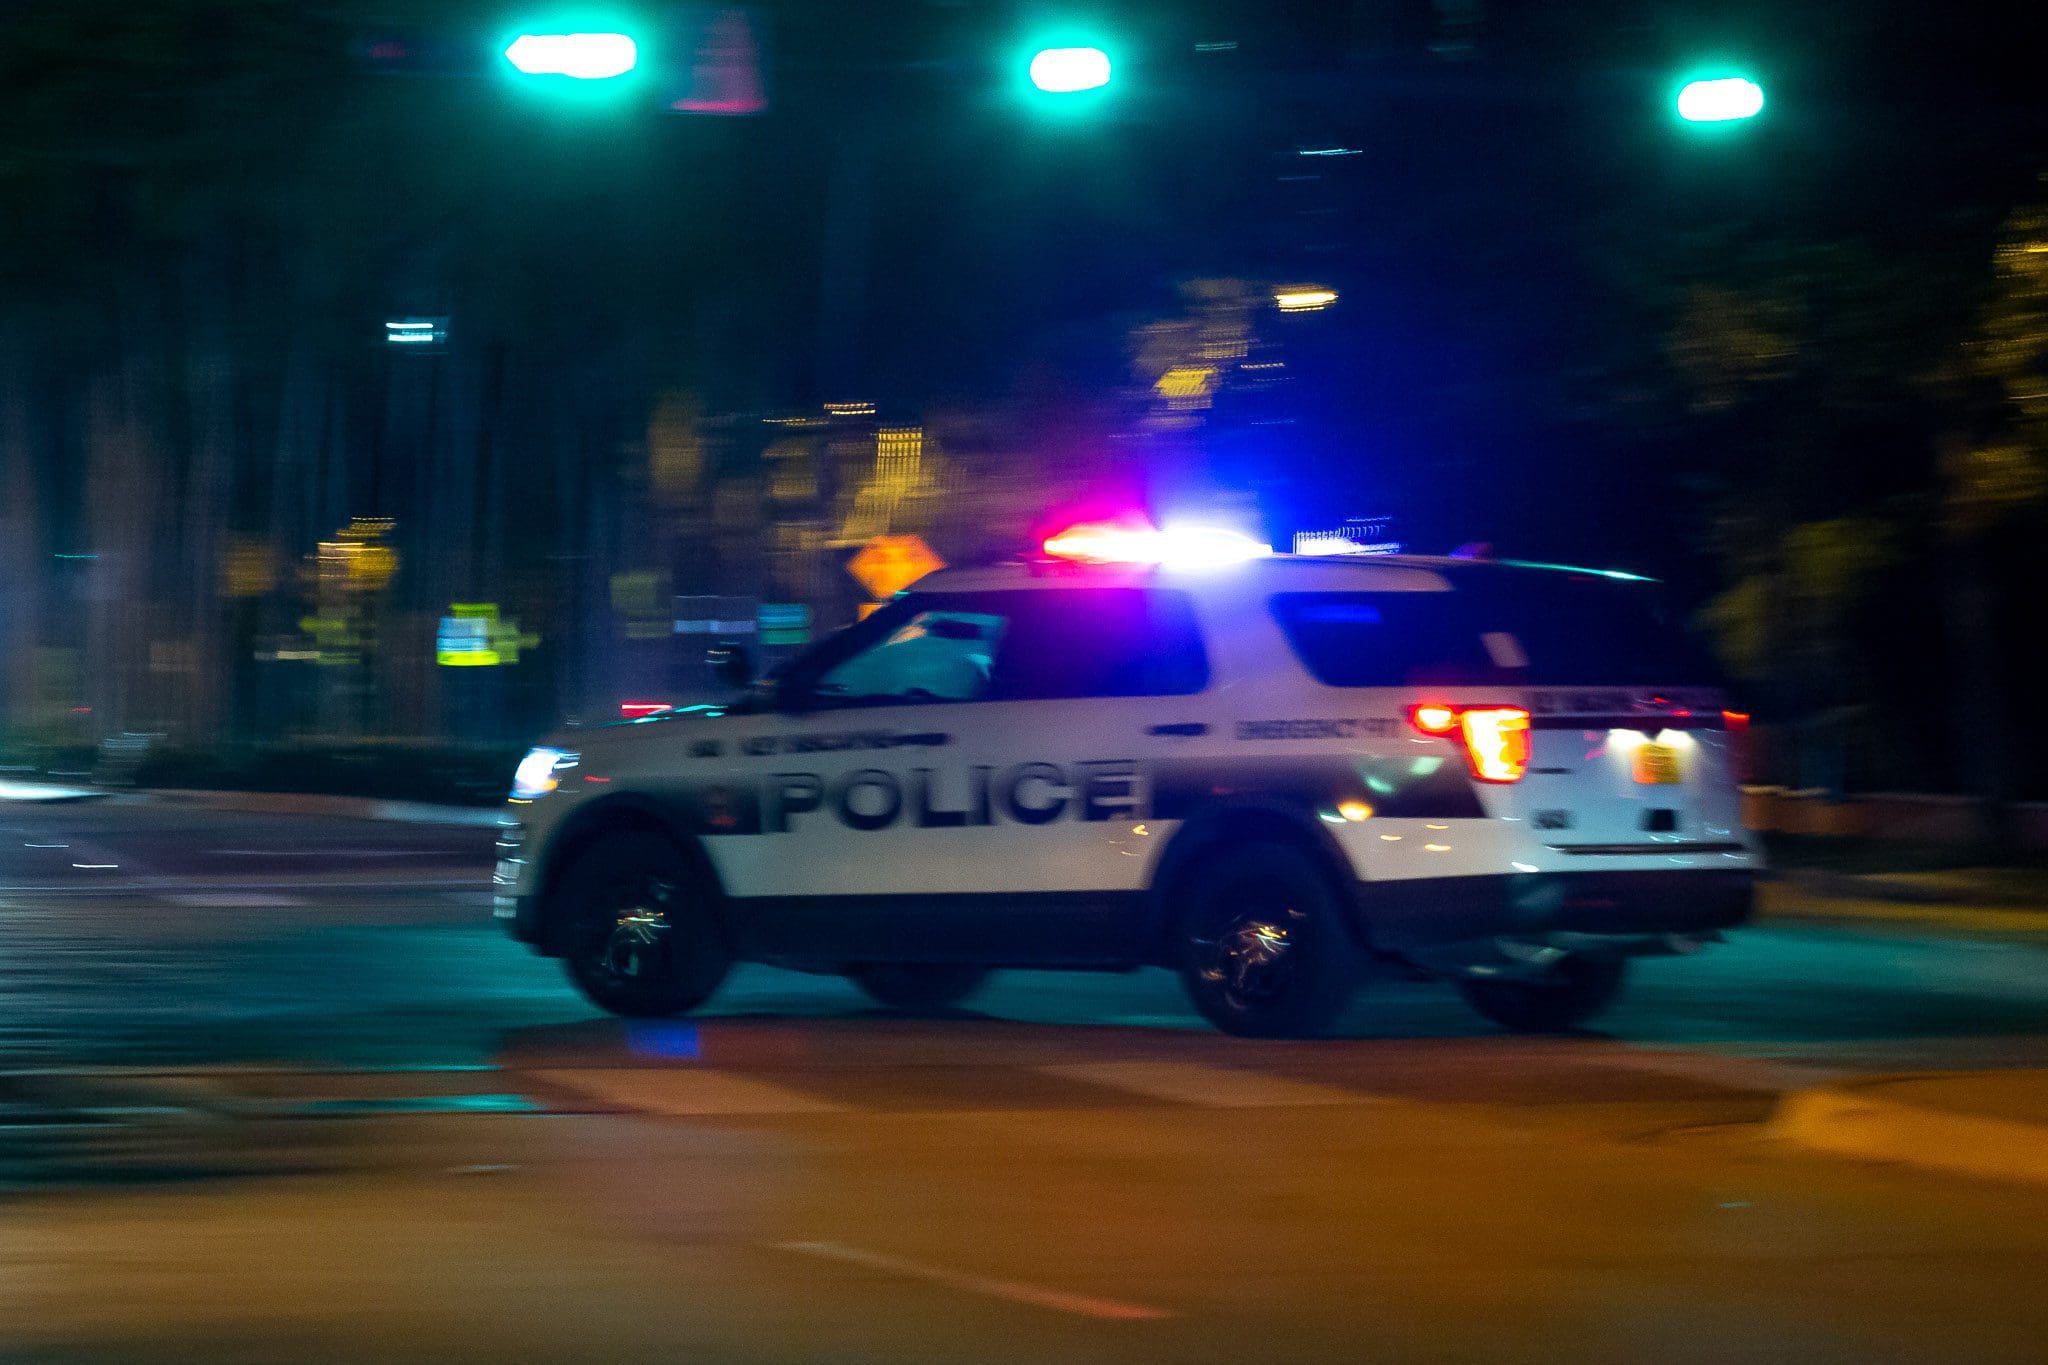 Key Biscayne police car at night on patrol